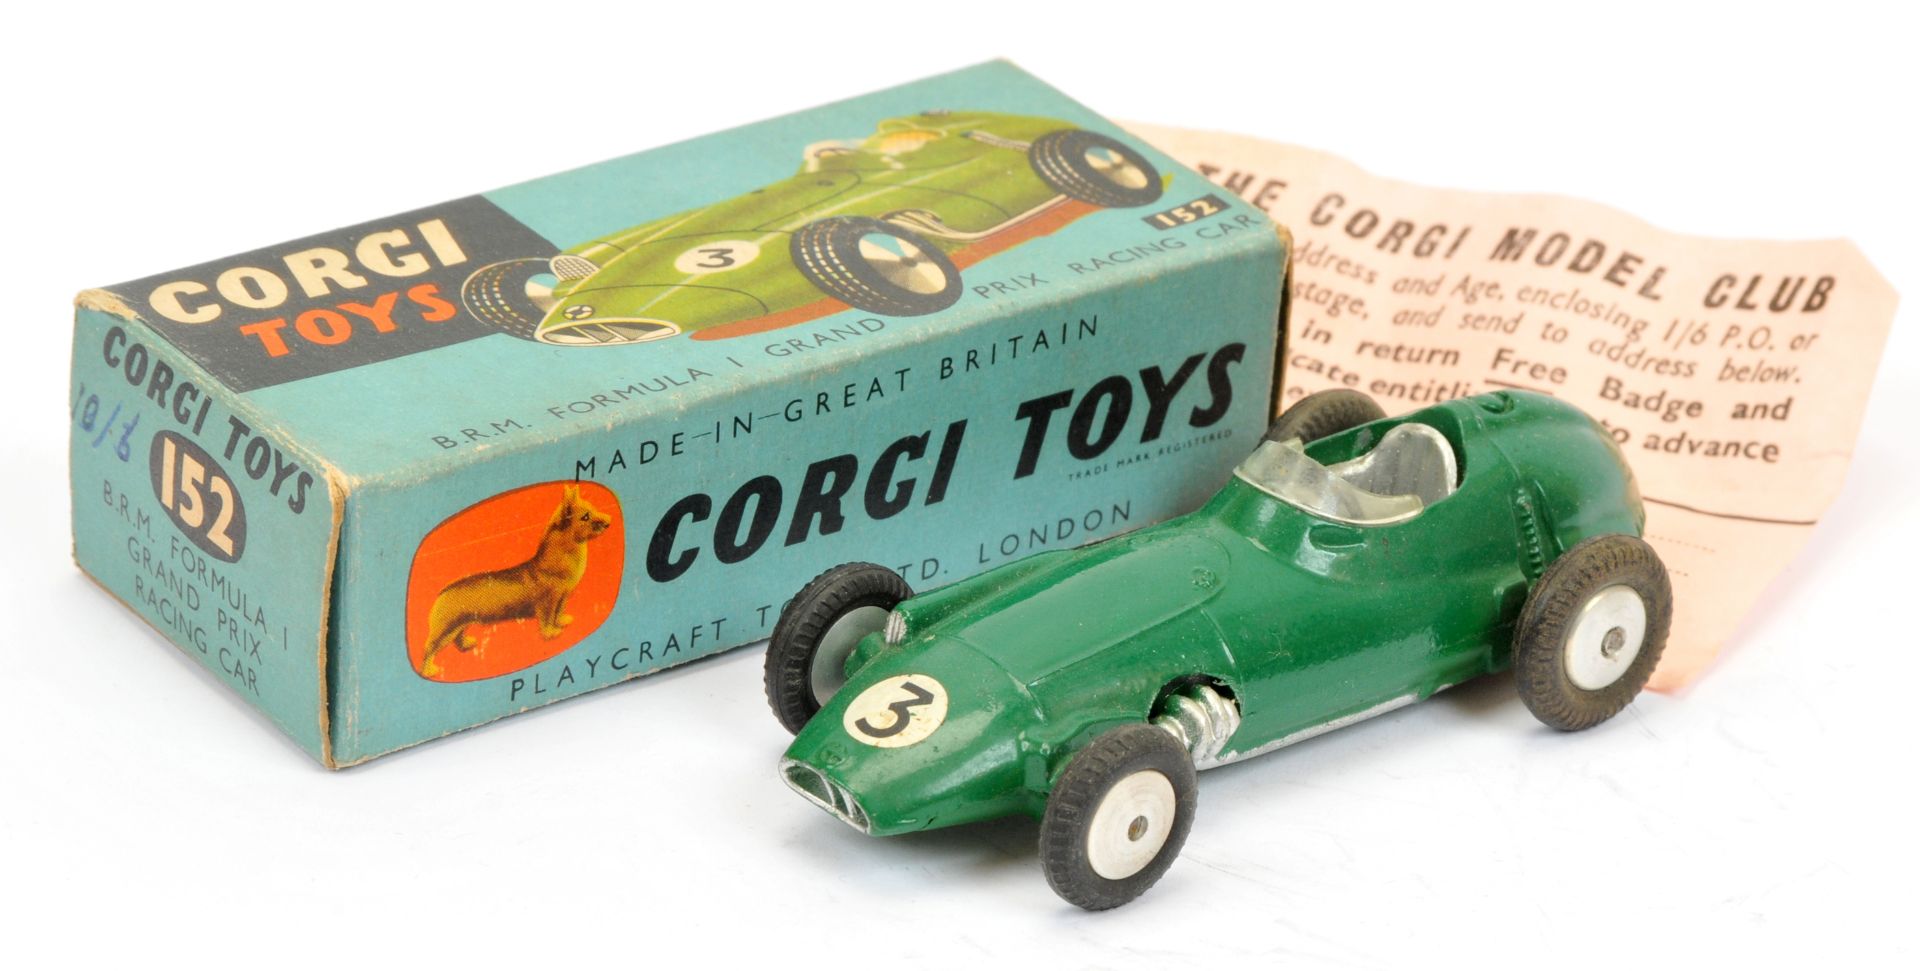 Corgi Toys 152 BRM Formula 1 "Grand Prix" Racing car - dark green, silver interior and trim